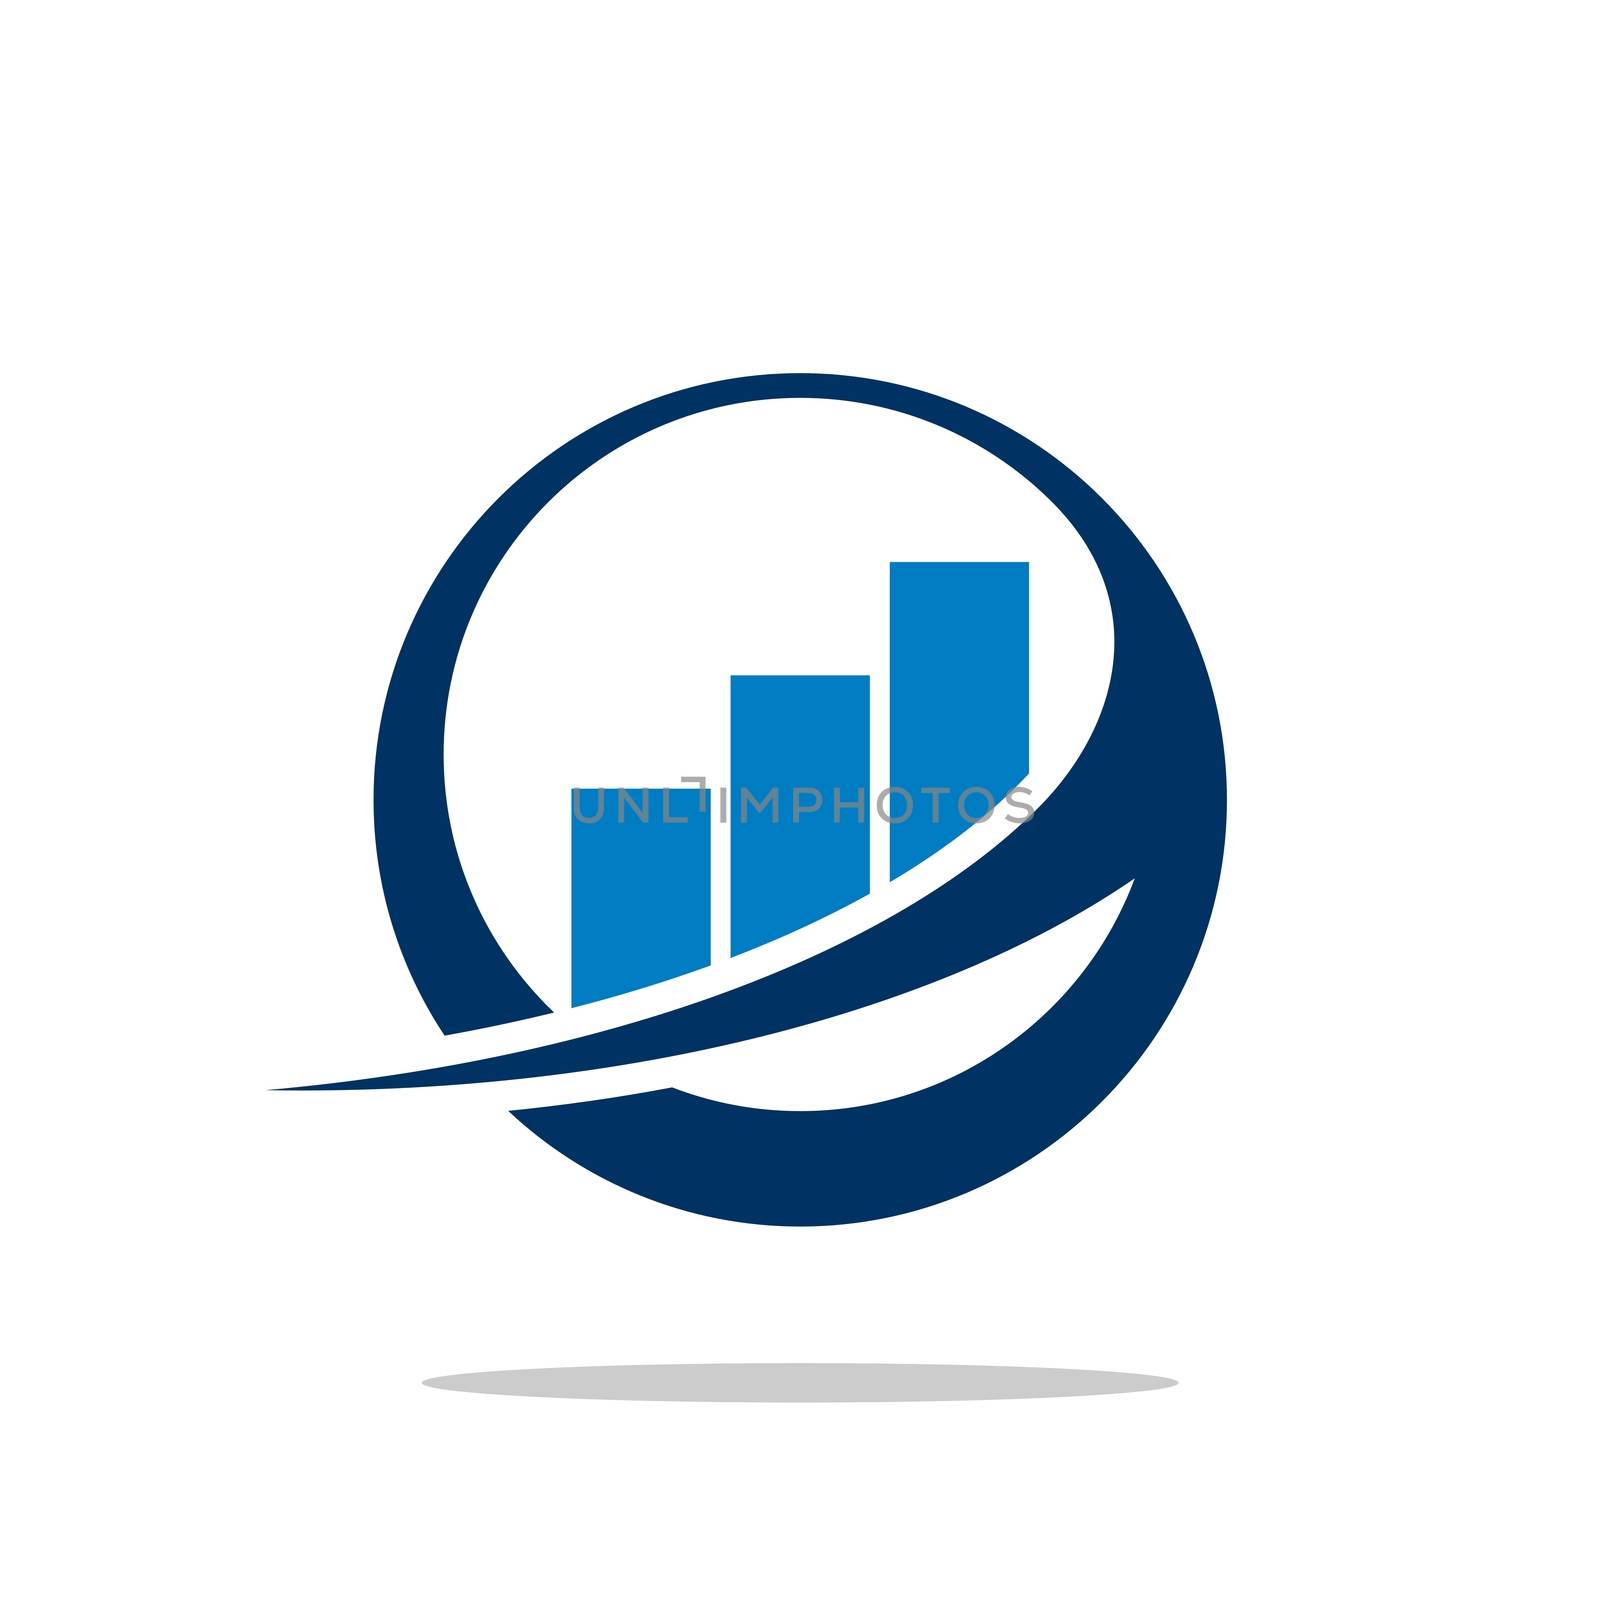 Stock Exchange Finance and Advisory Logo Template Illustration Design EPS 10 by soponyono1